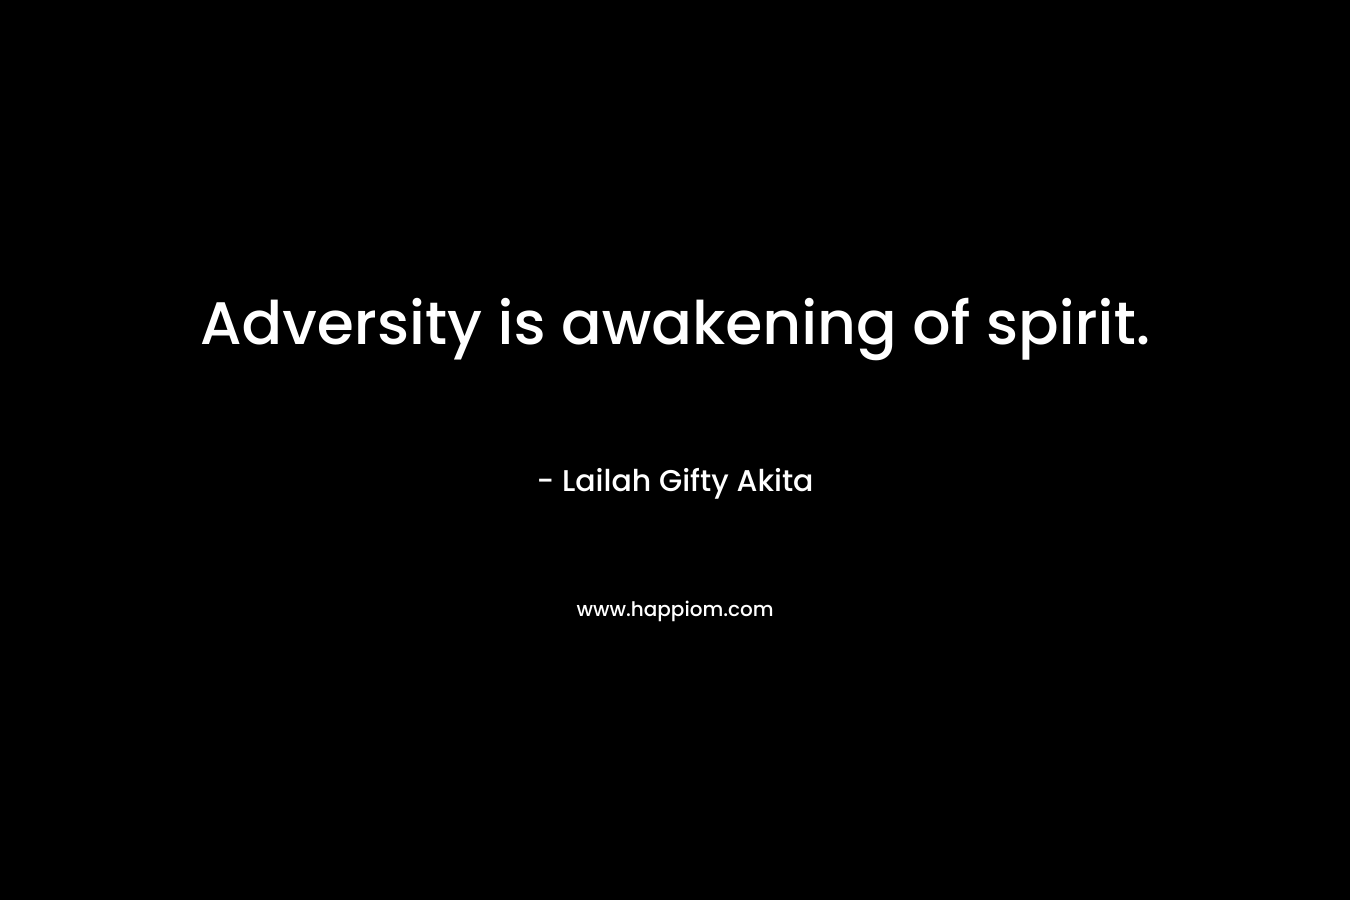 Adversity is awakening of spirit.